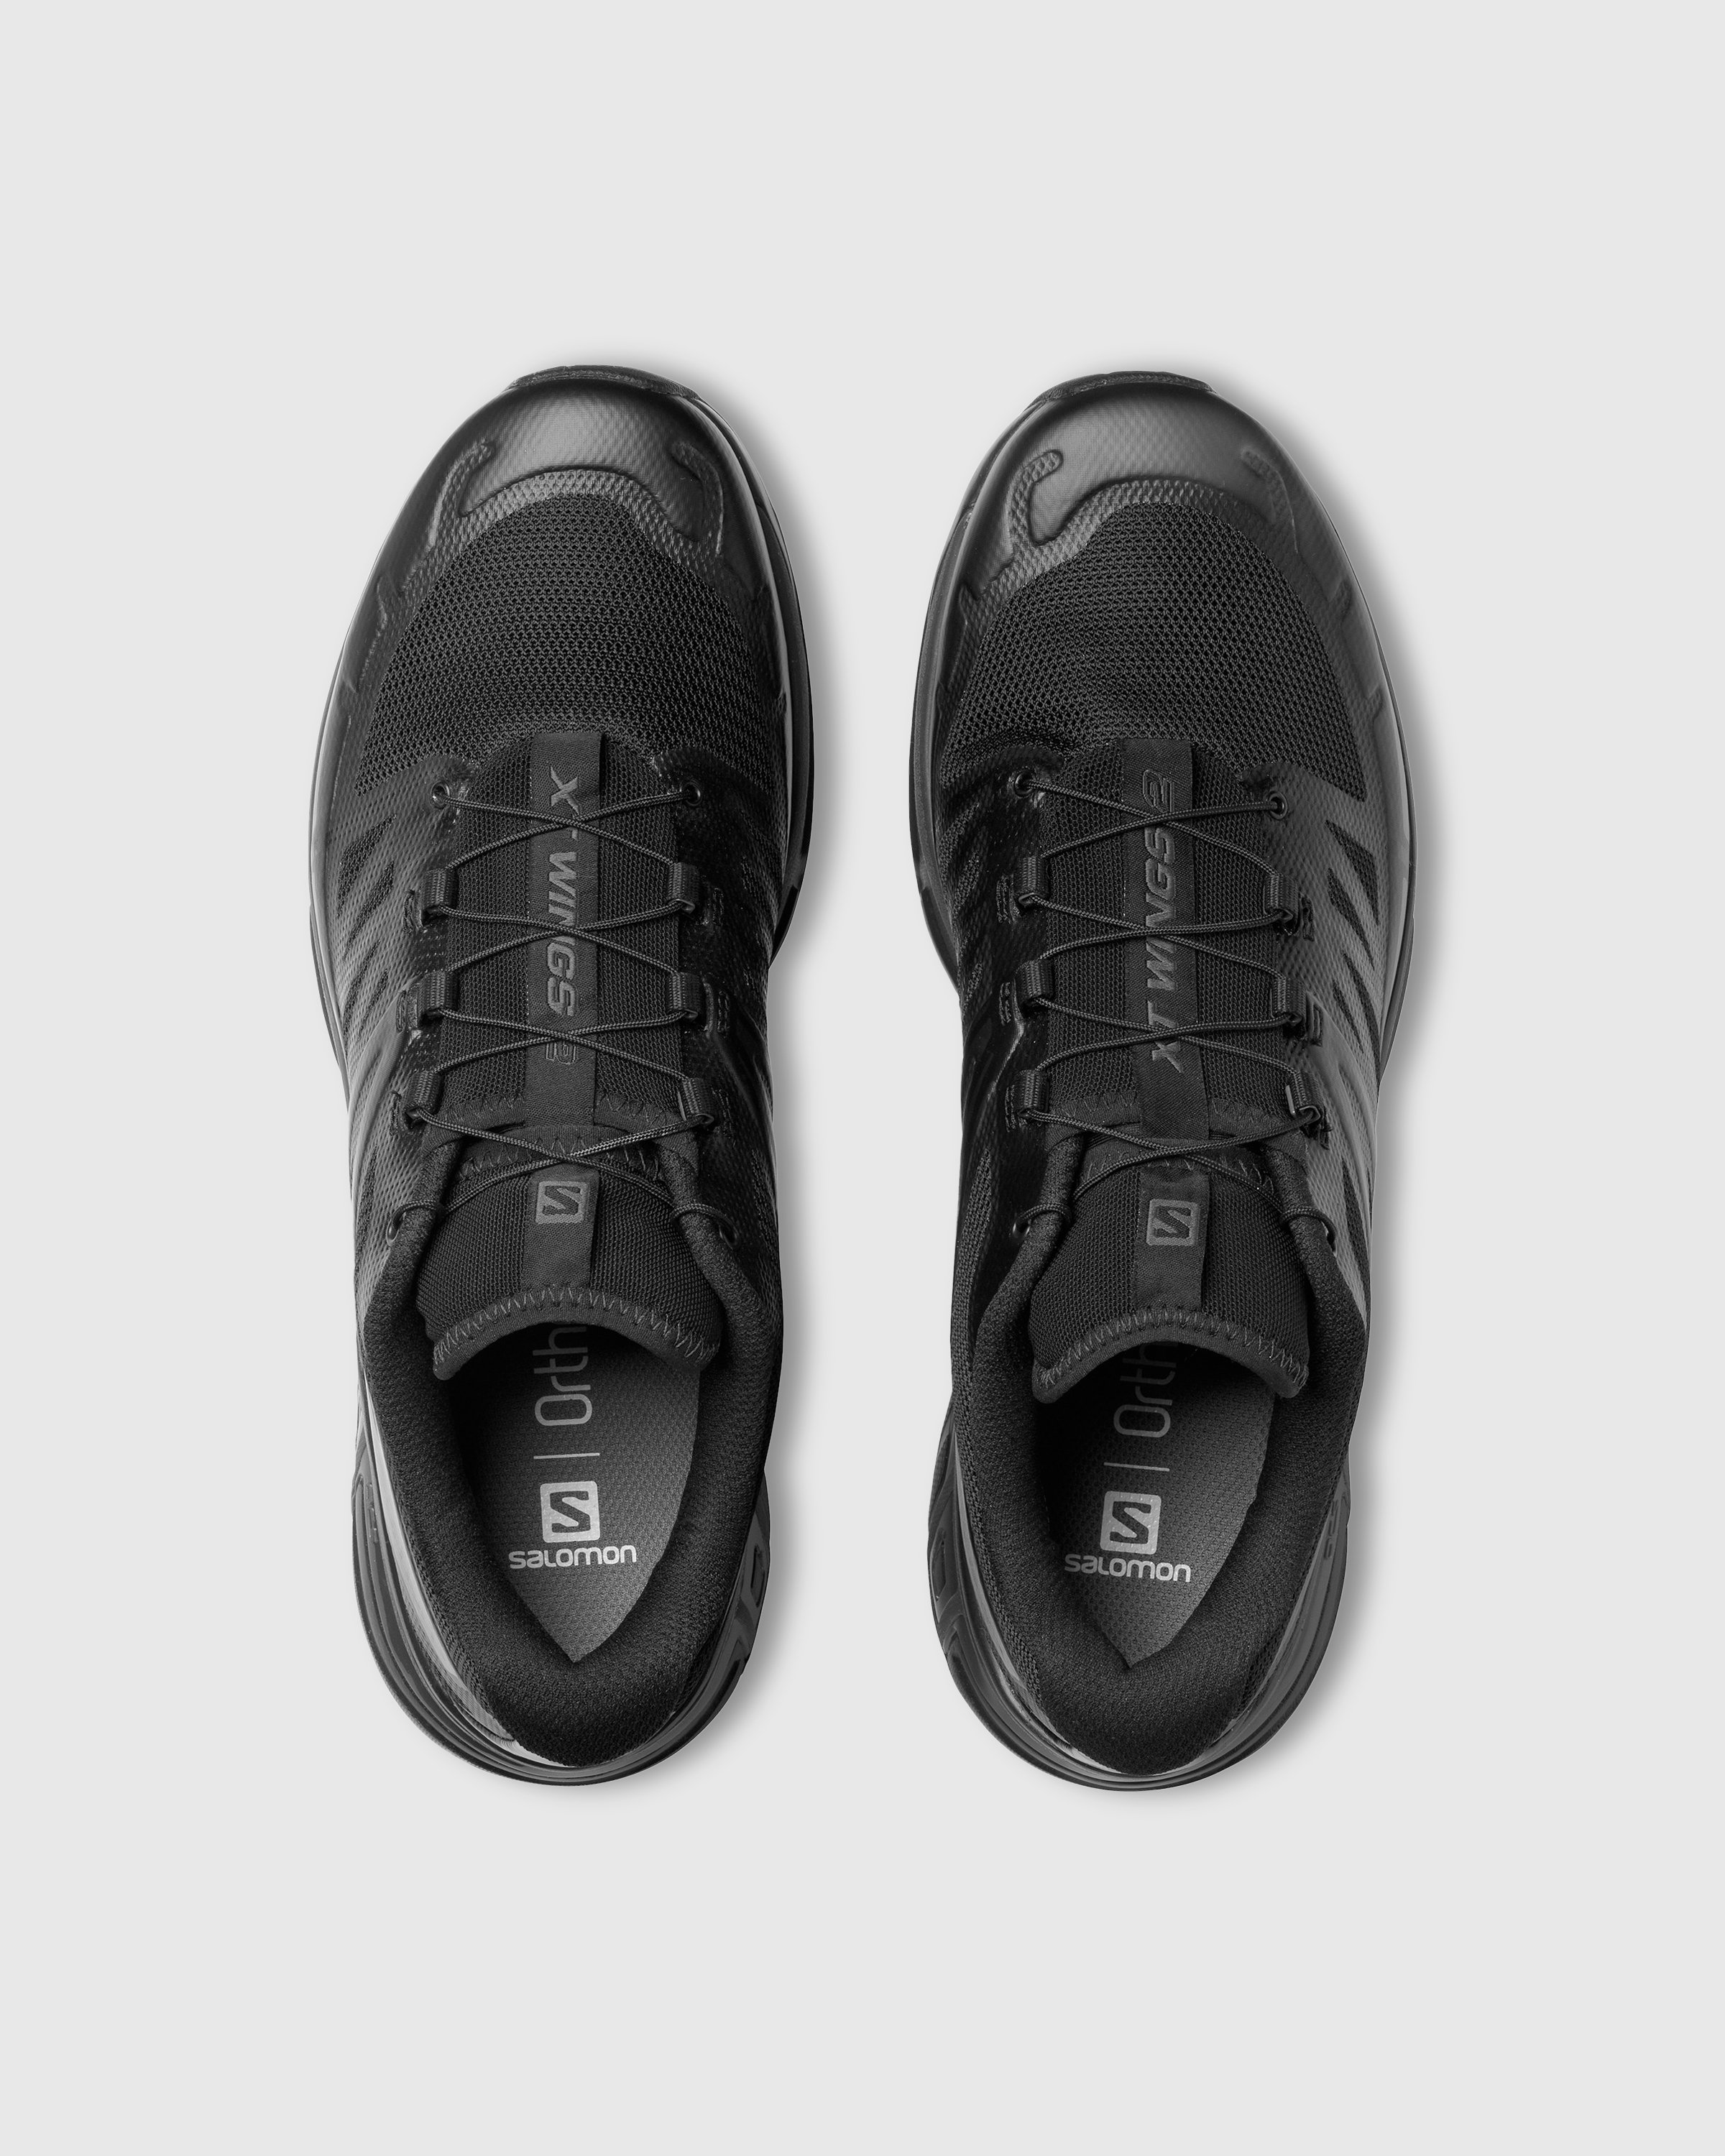 Salomon - XT-Wings 2 Advanced Black/Black/Magnet - Footwear - Black - Image 3